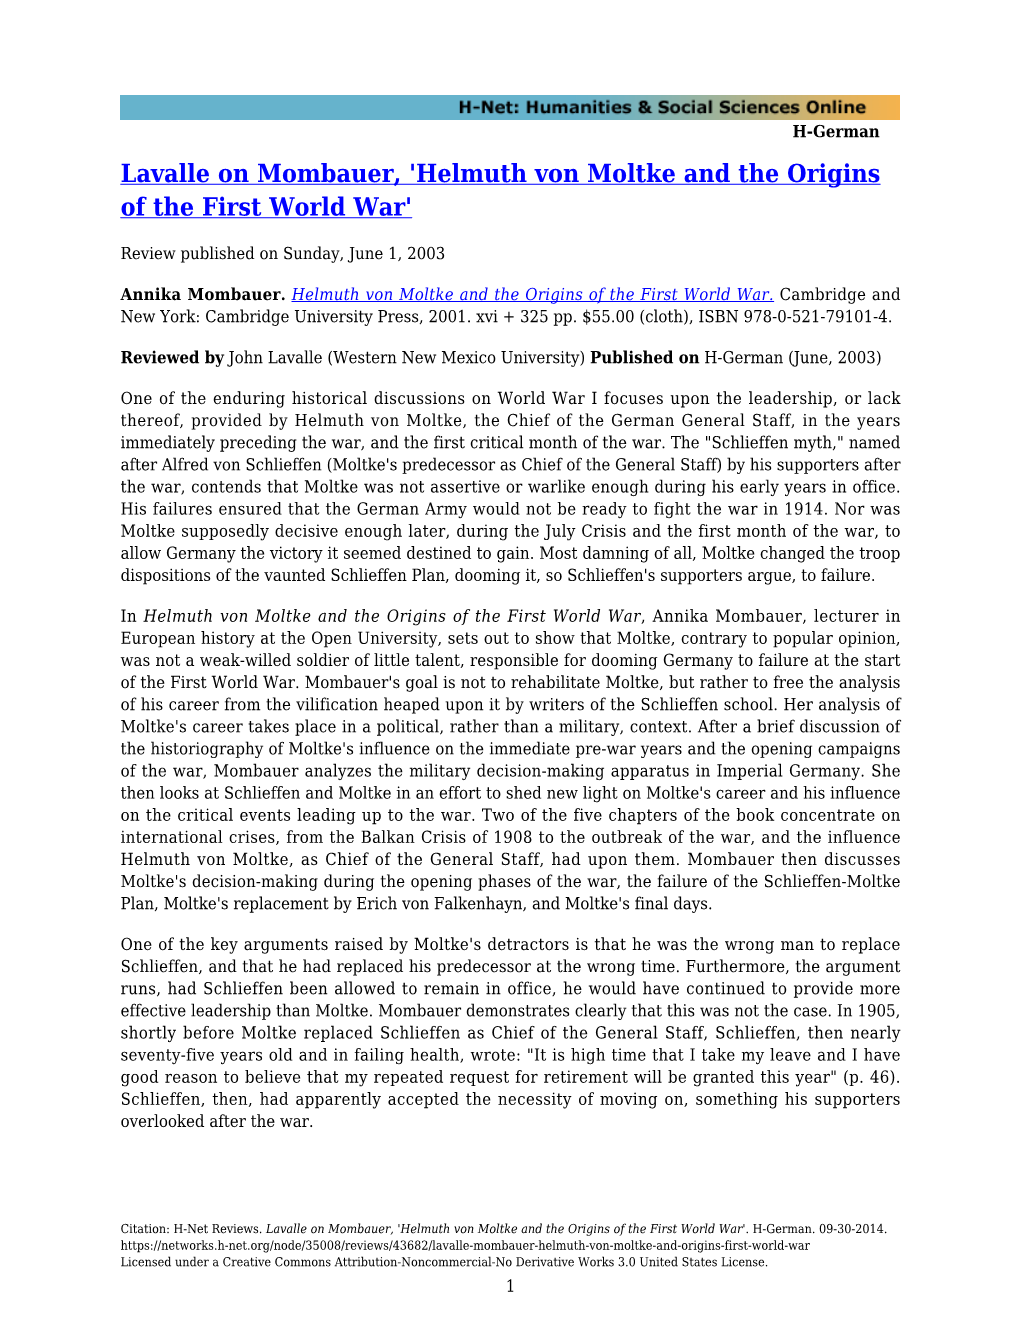 Helmuth Von Moltke and the Origins of the First World War'